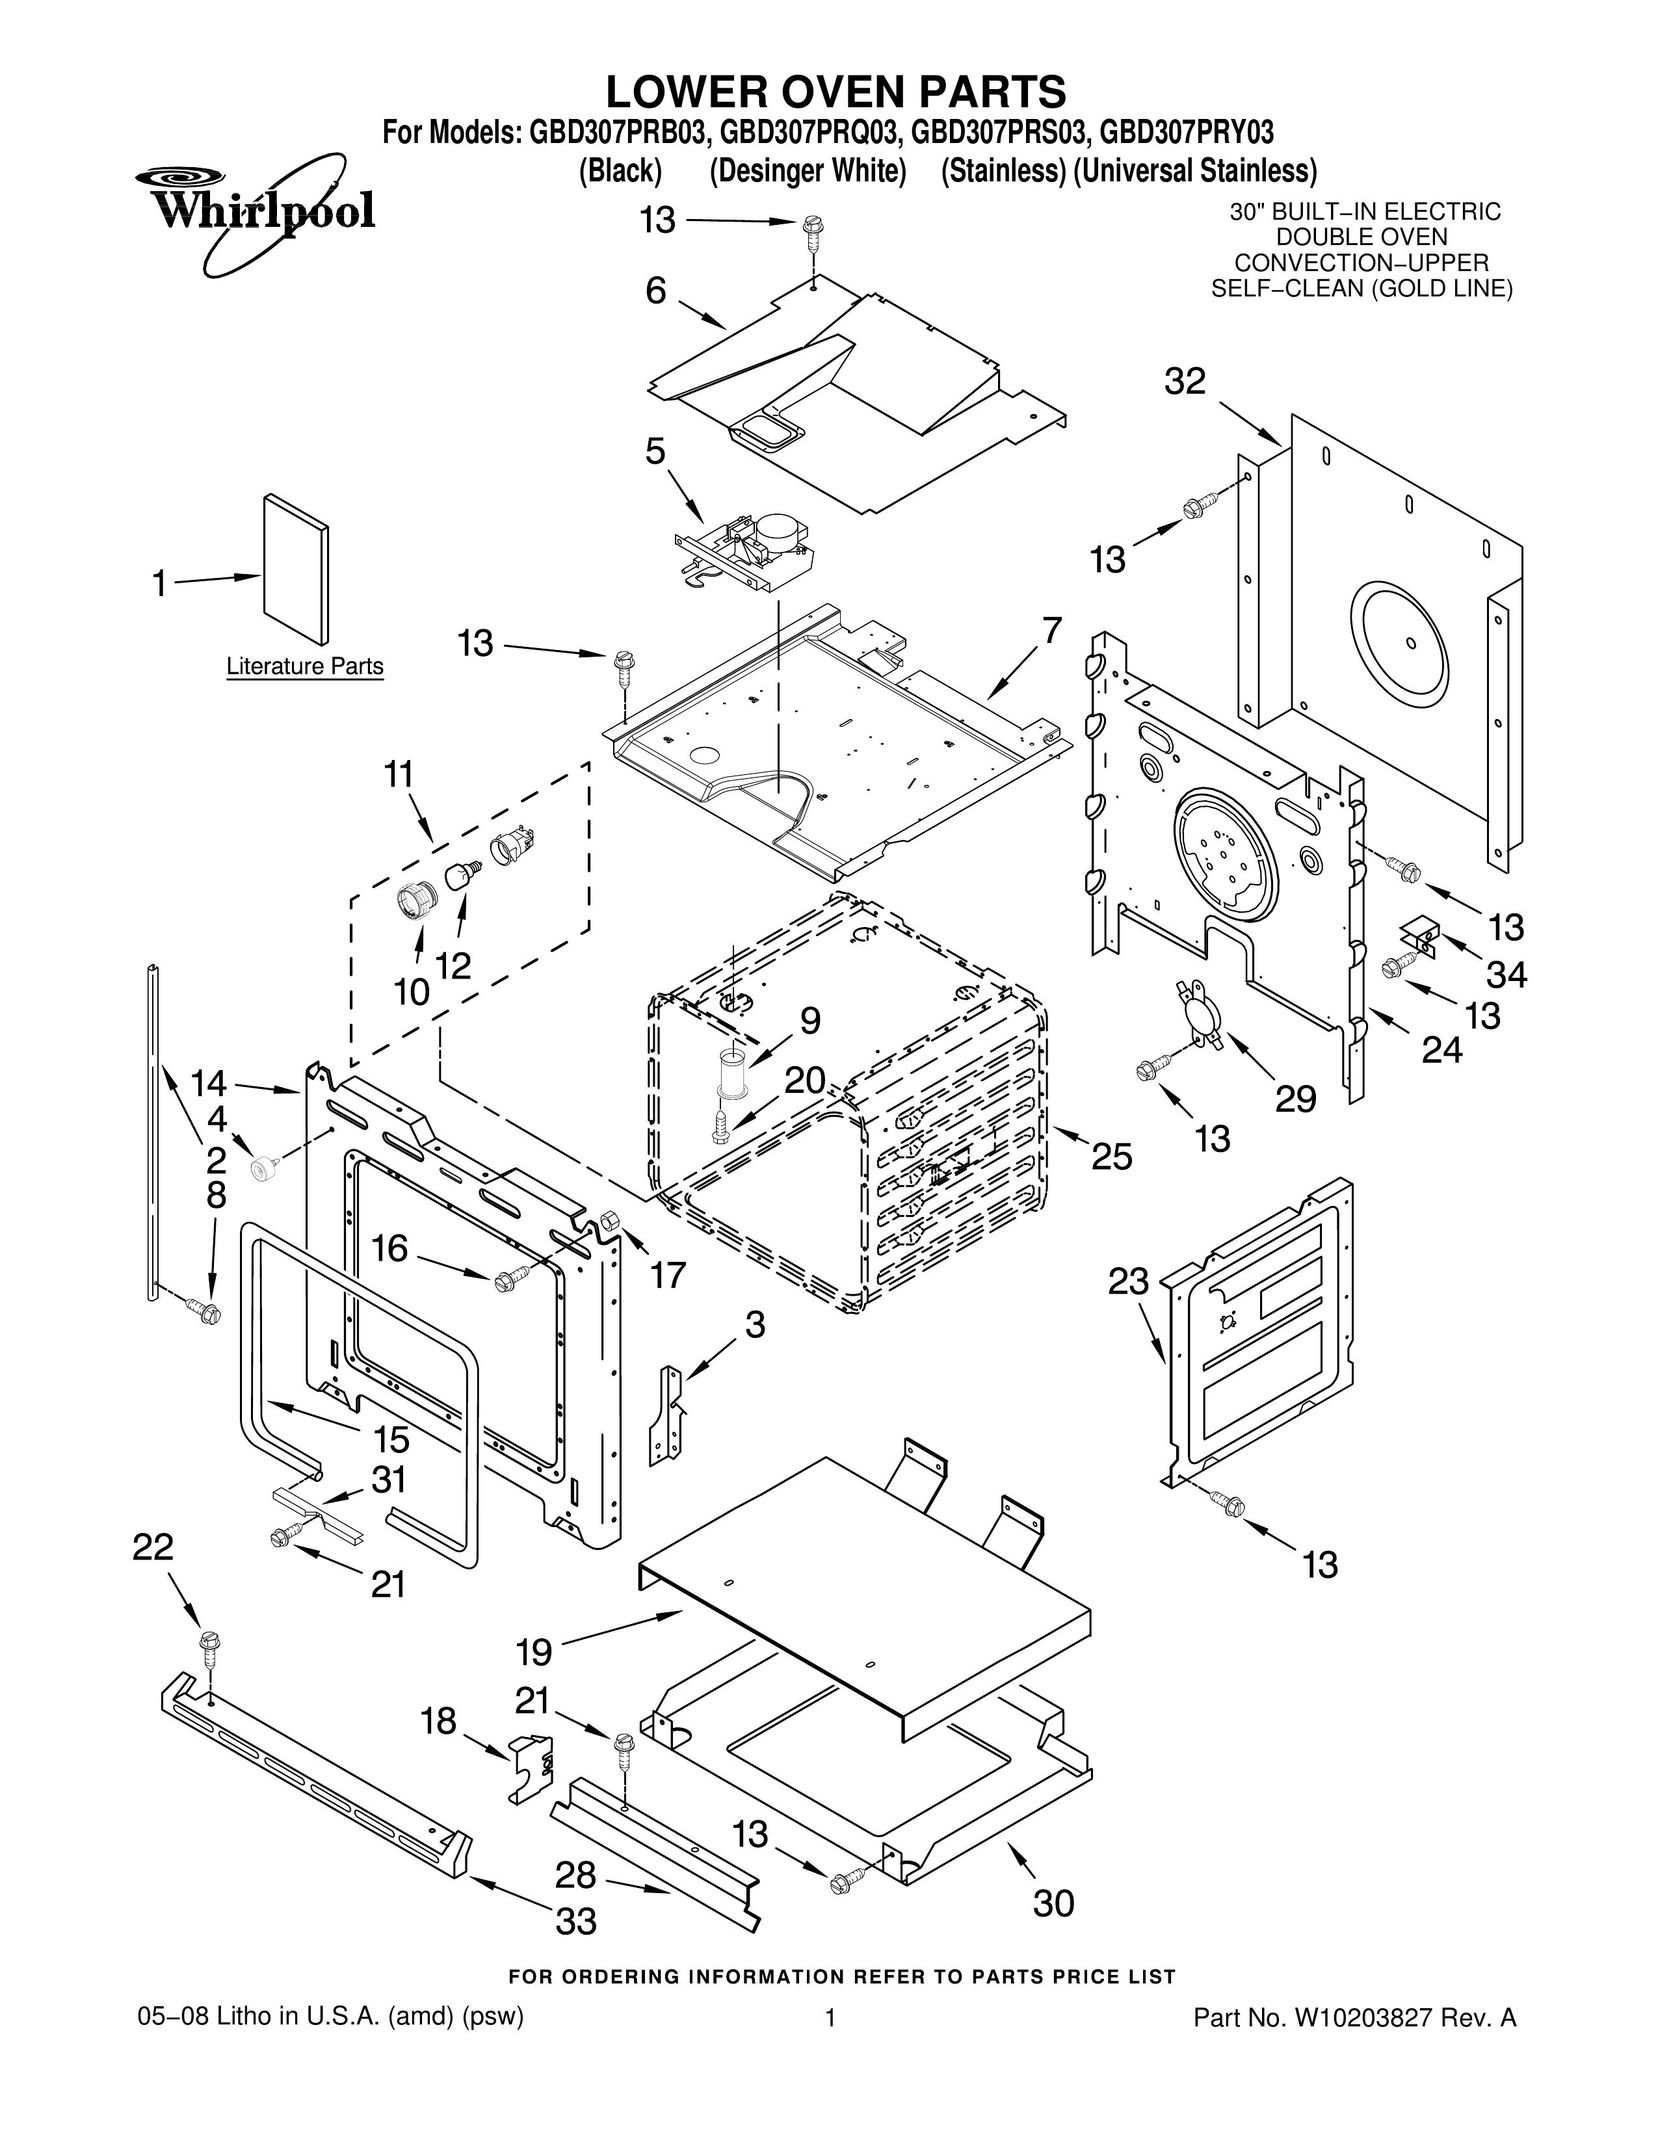 Whirlpool GBD307PRB03 Oven User Manual